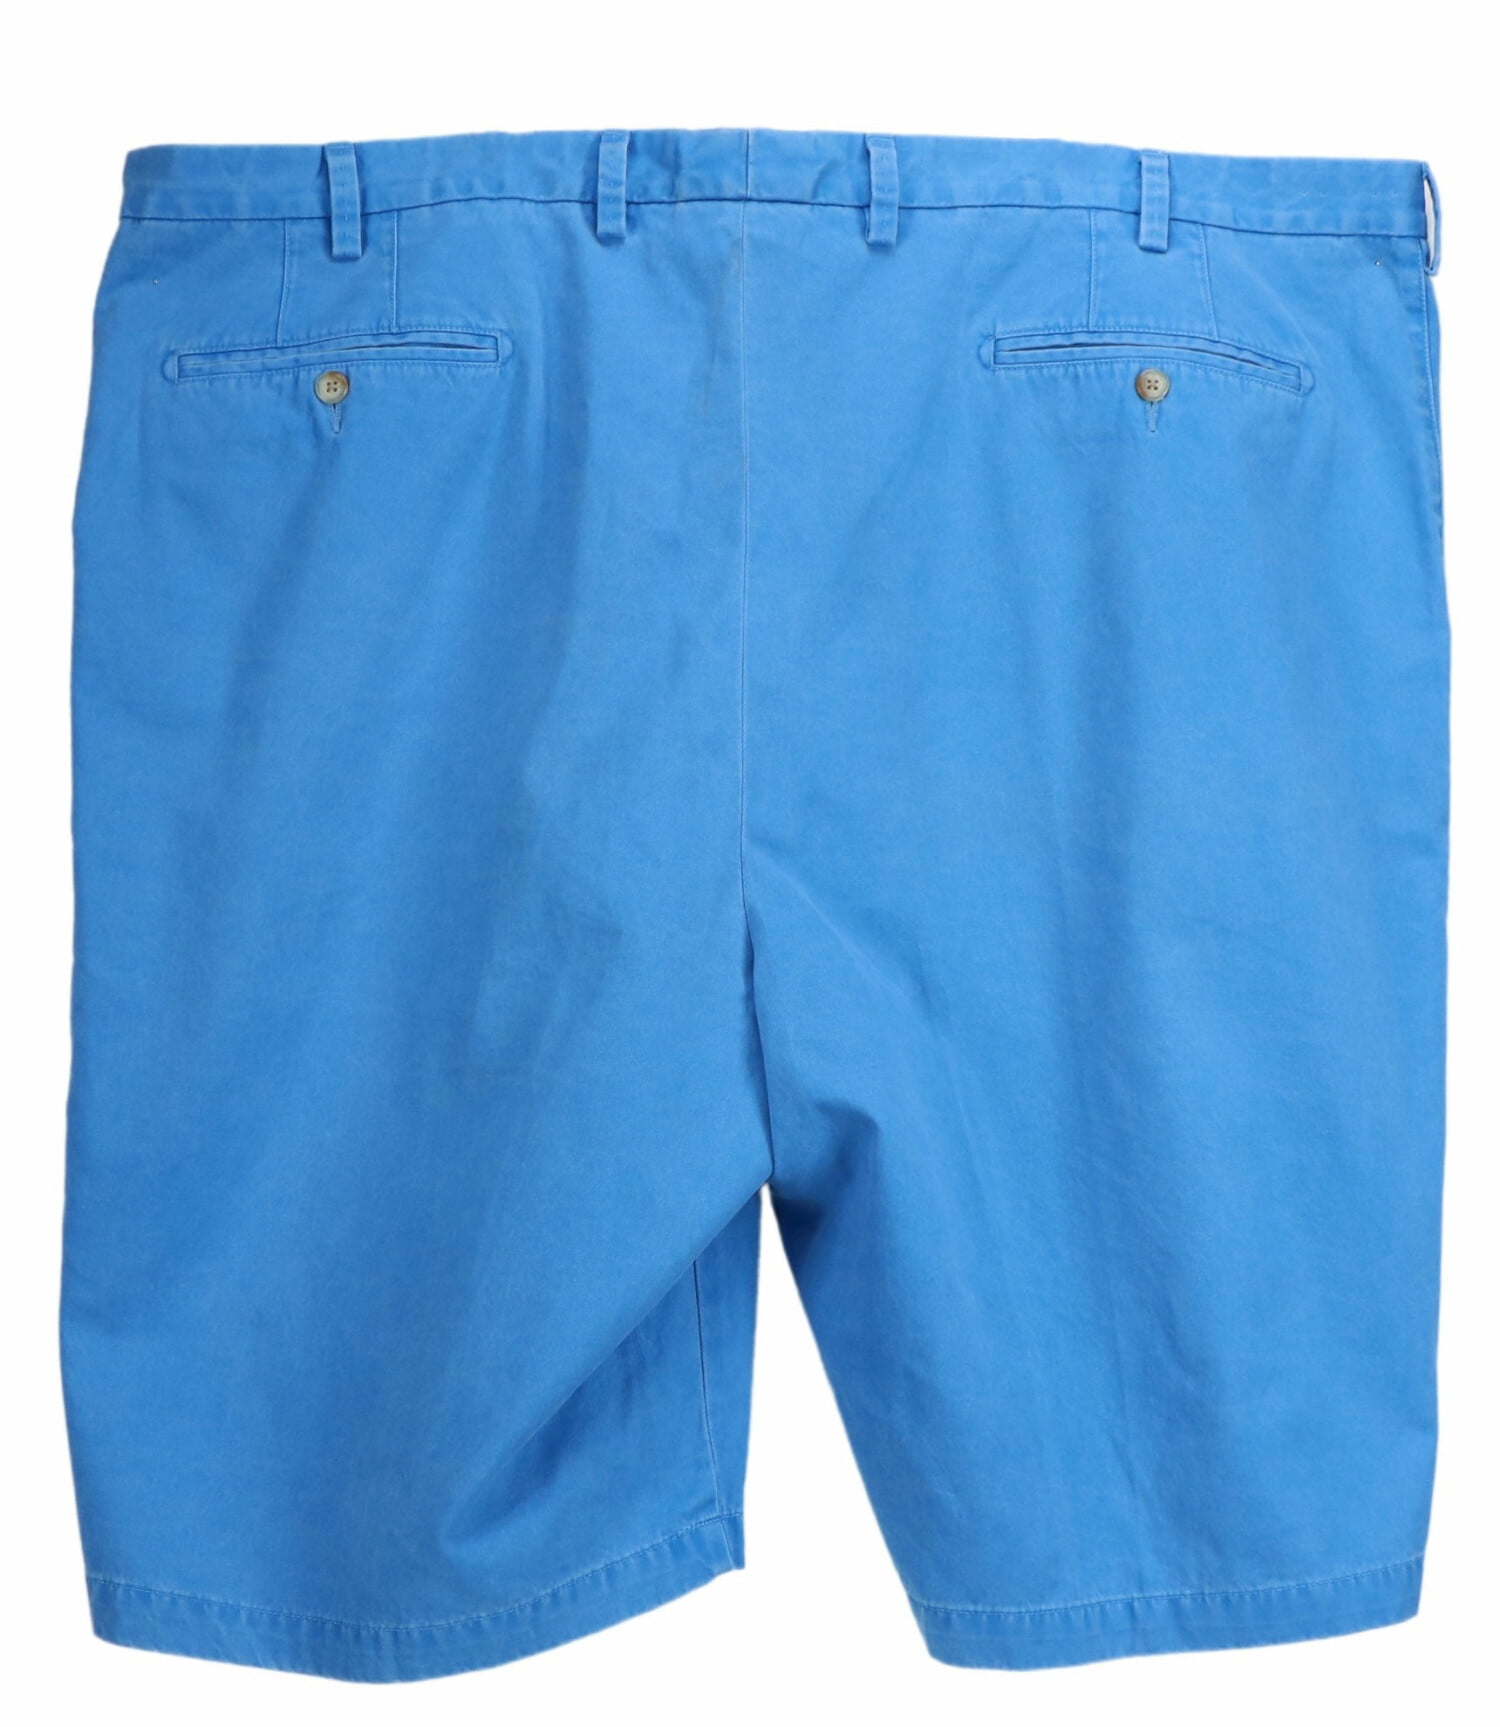 Fountain Blue Chino Size 20 Hurley Kids' Boys' Youth Dri-Fit Chino Shorts 